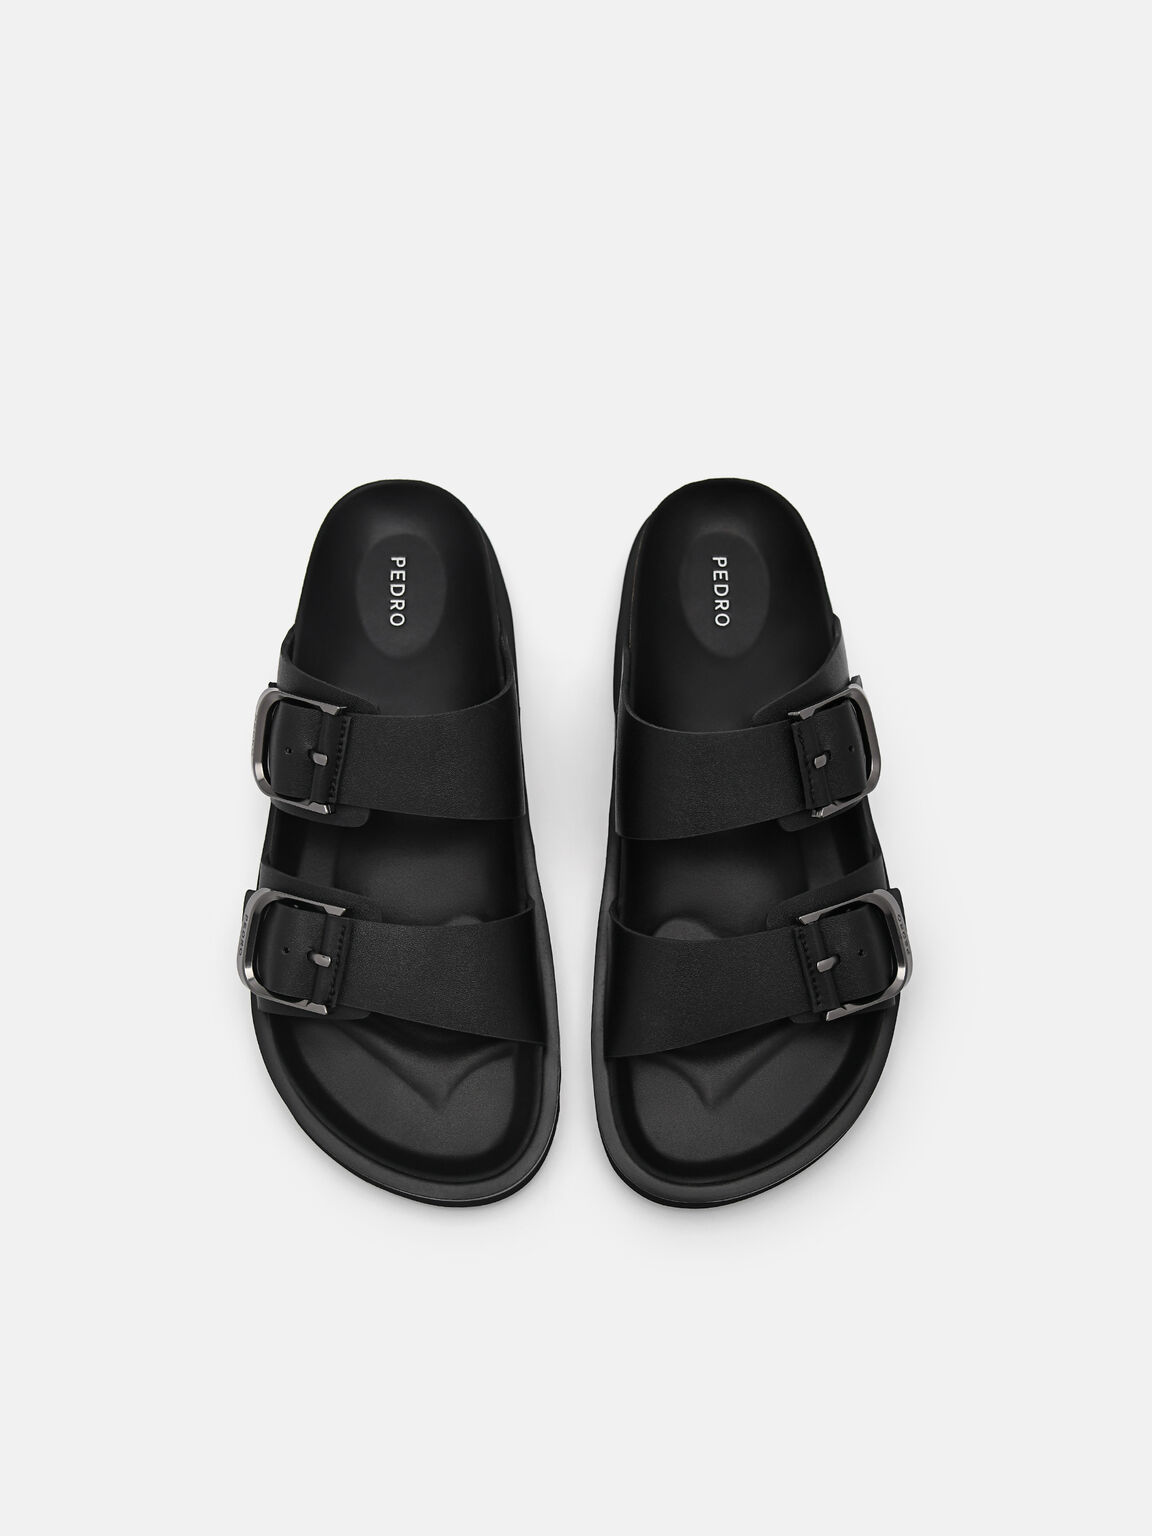 Helix Sandals, Black